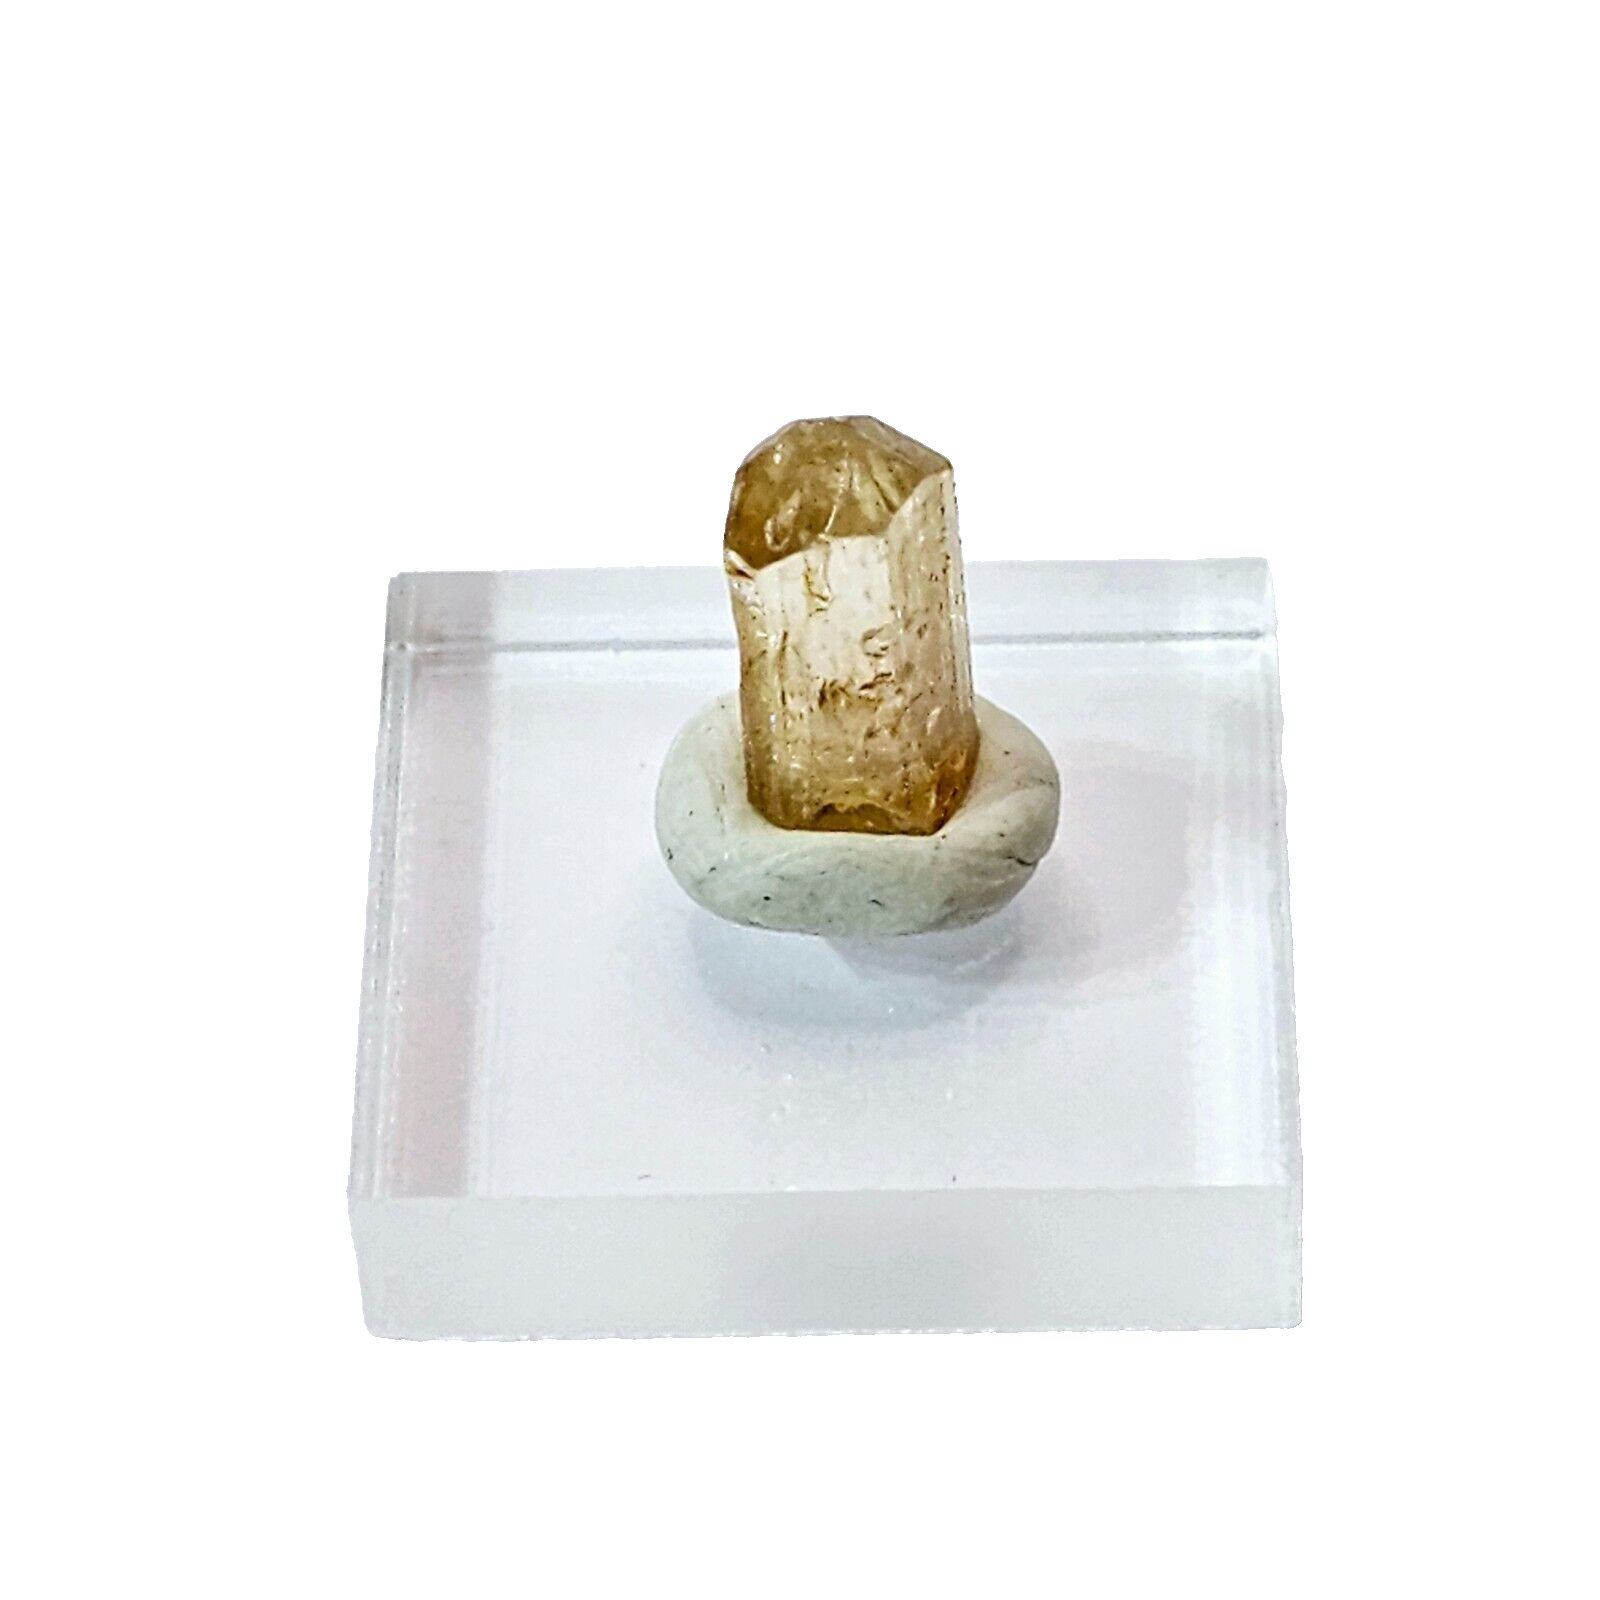 Imperial Topaz Mini Crystal Specimen Collector Metaphysical Reiki 5.5 Carats